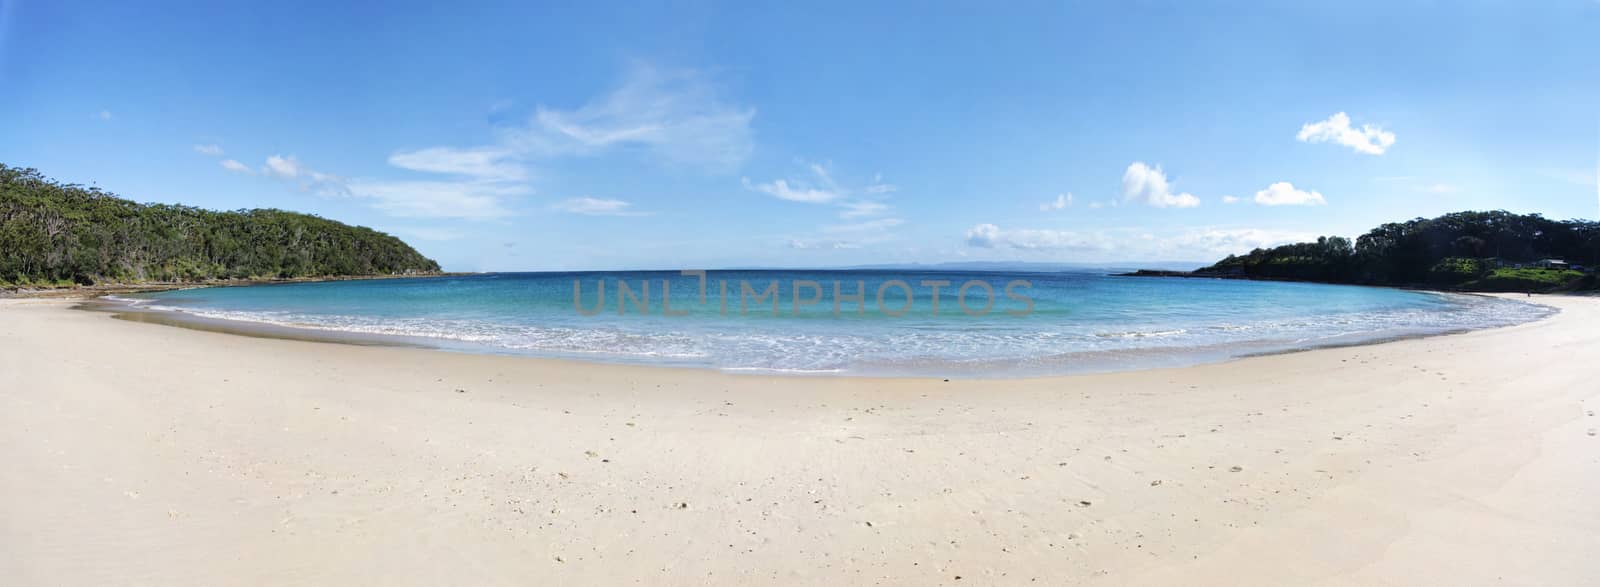 Summercloud Bay Panorama by lovleah